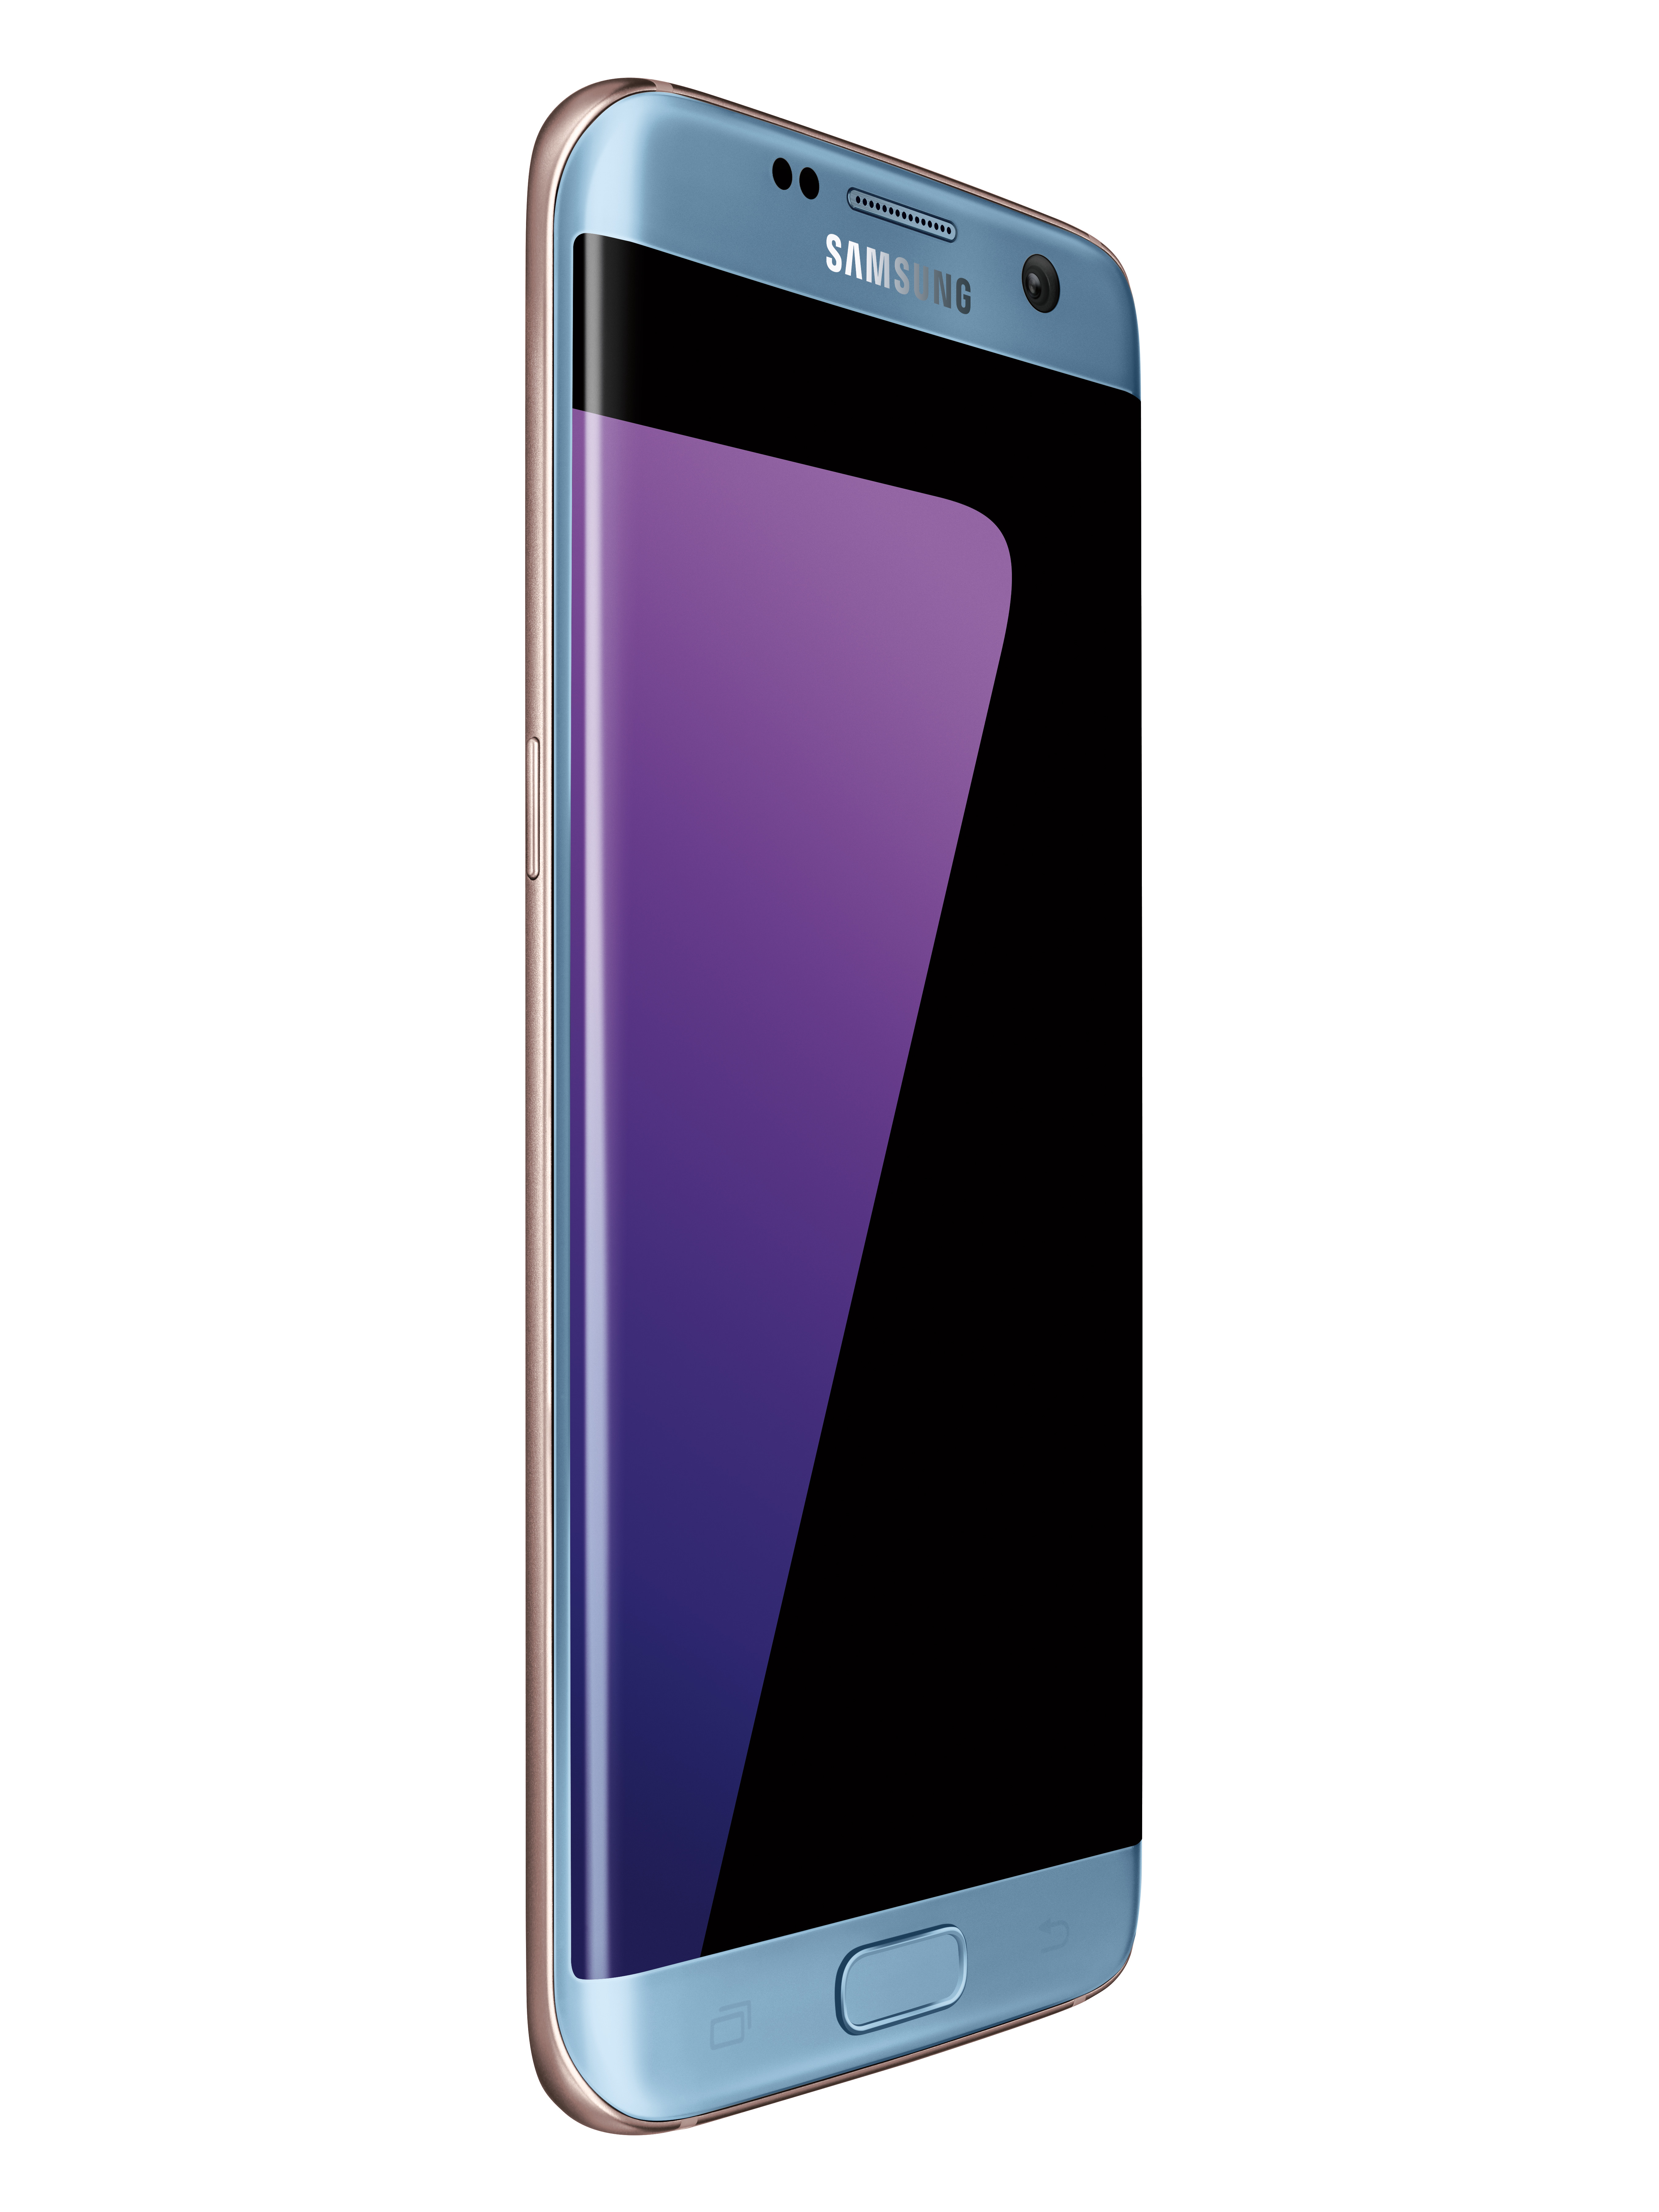 Samsung Galaxy S7 Edge Blue Coral launches November 1